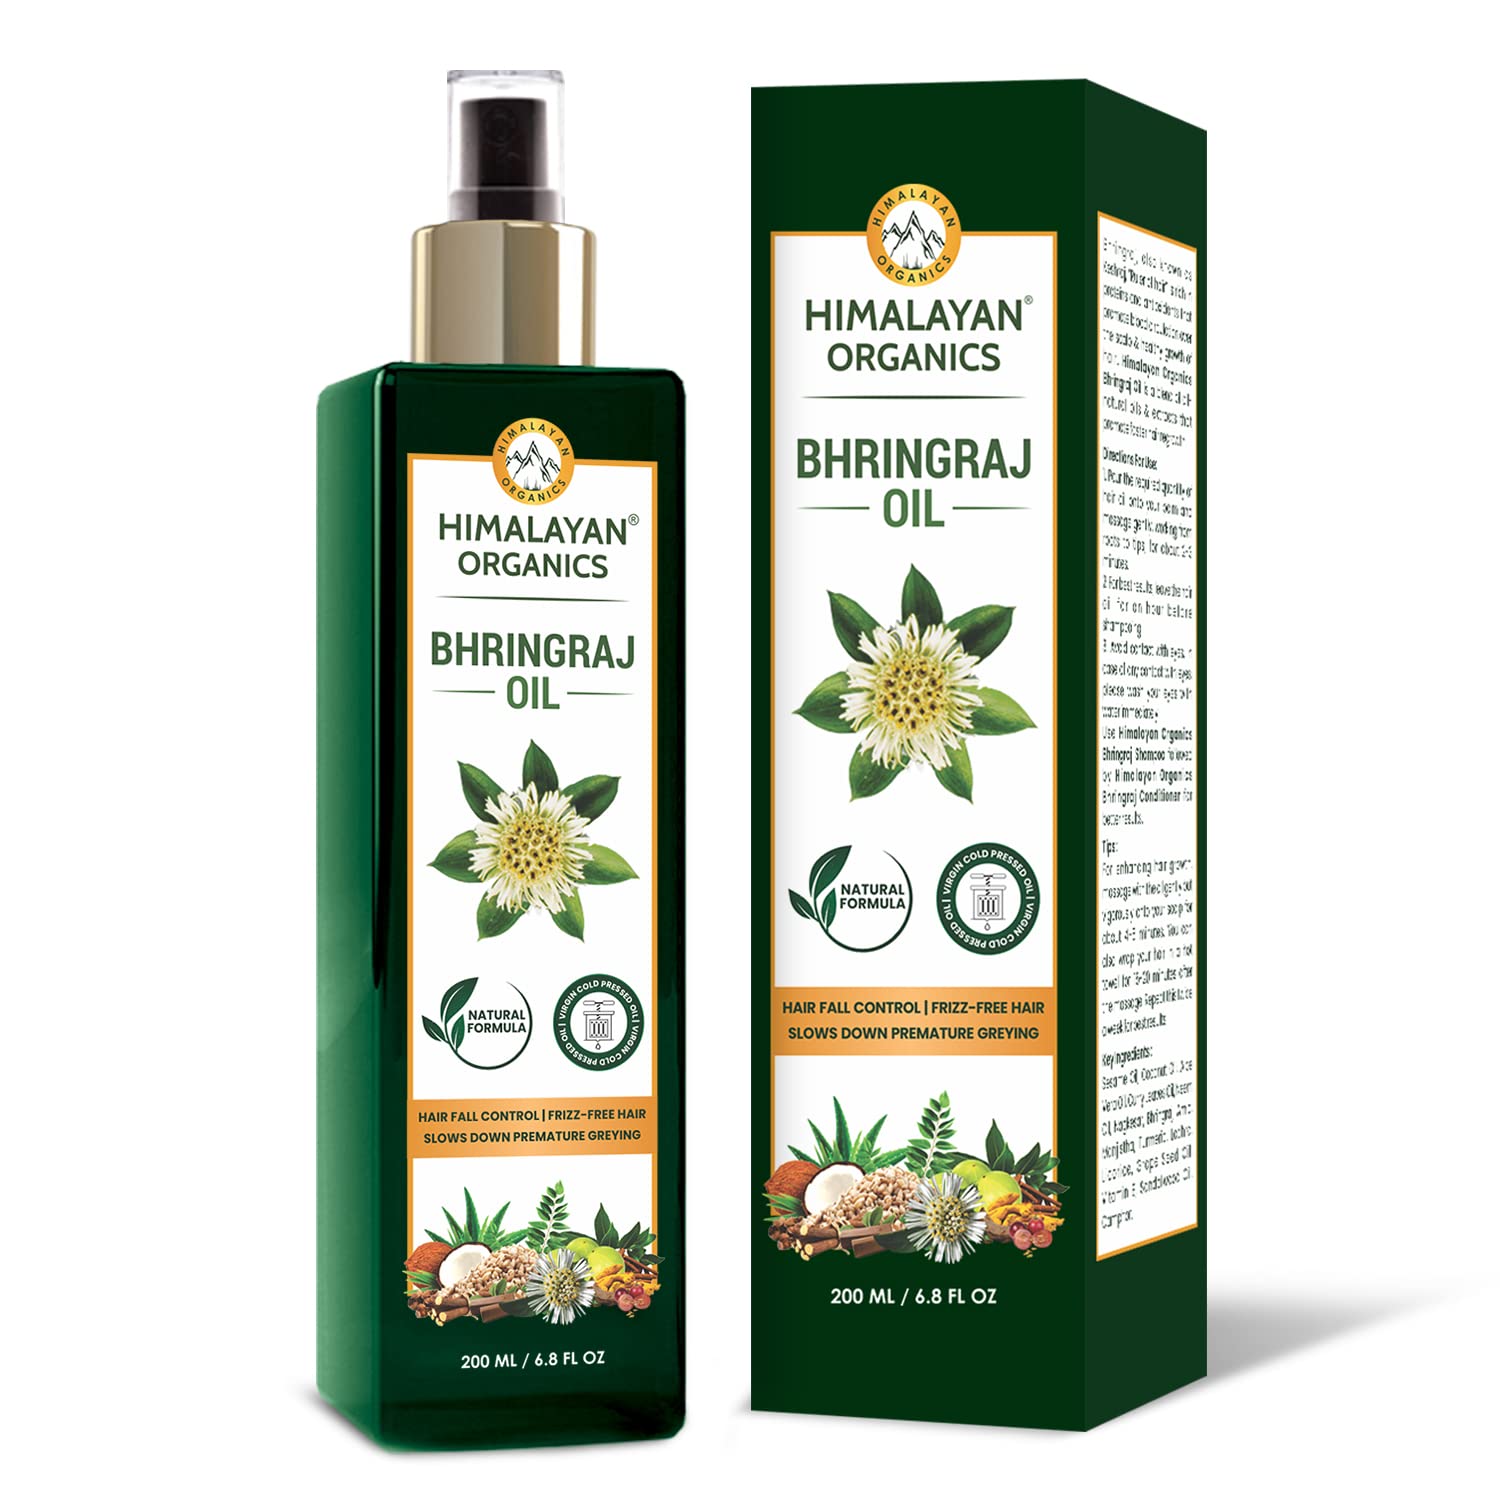 Himalayan Organics Bhringraj Oil - 200 ML